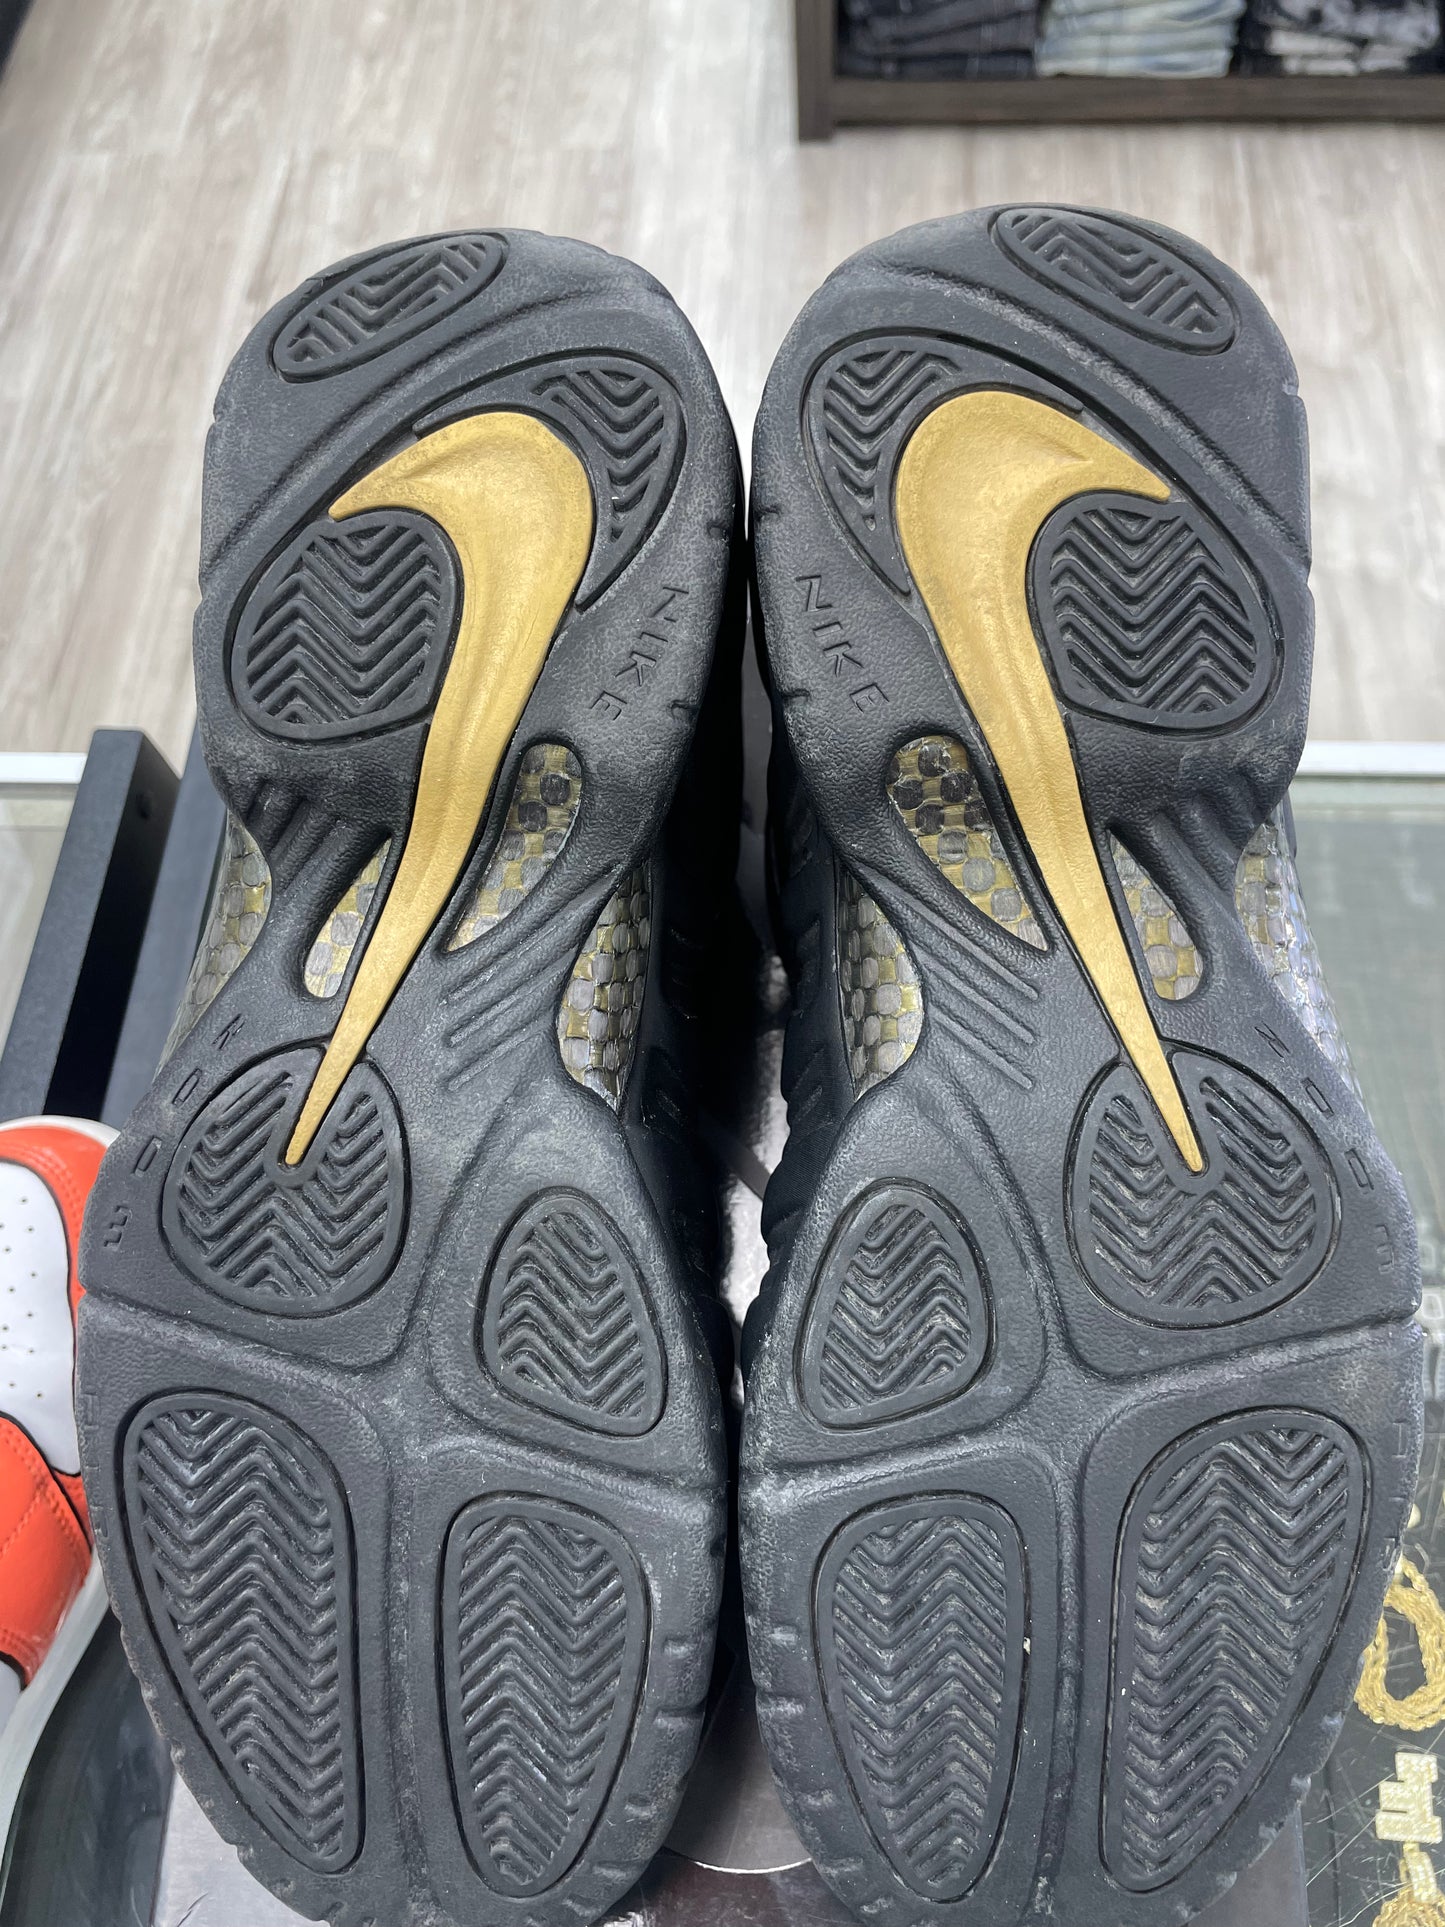 Air Nike Foamposite Pro "Black Metallic Gold" *Size 8.5 Preowned*